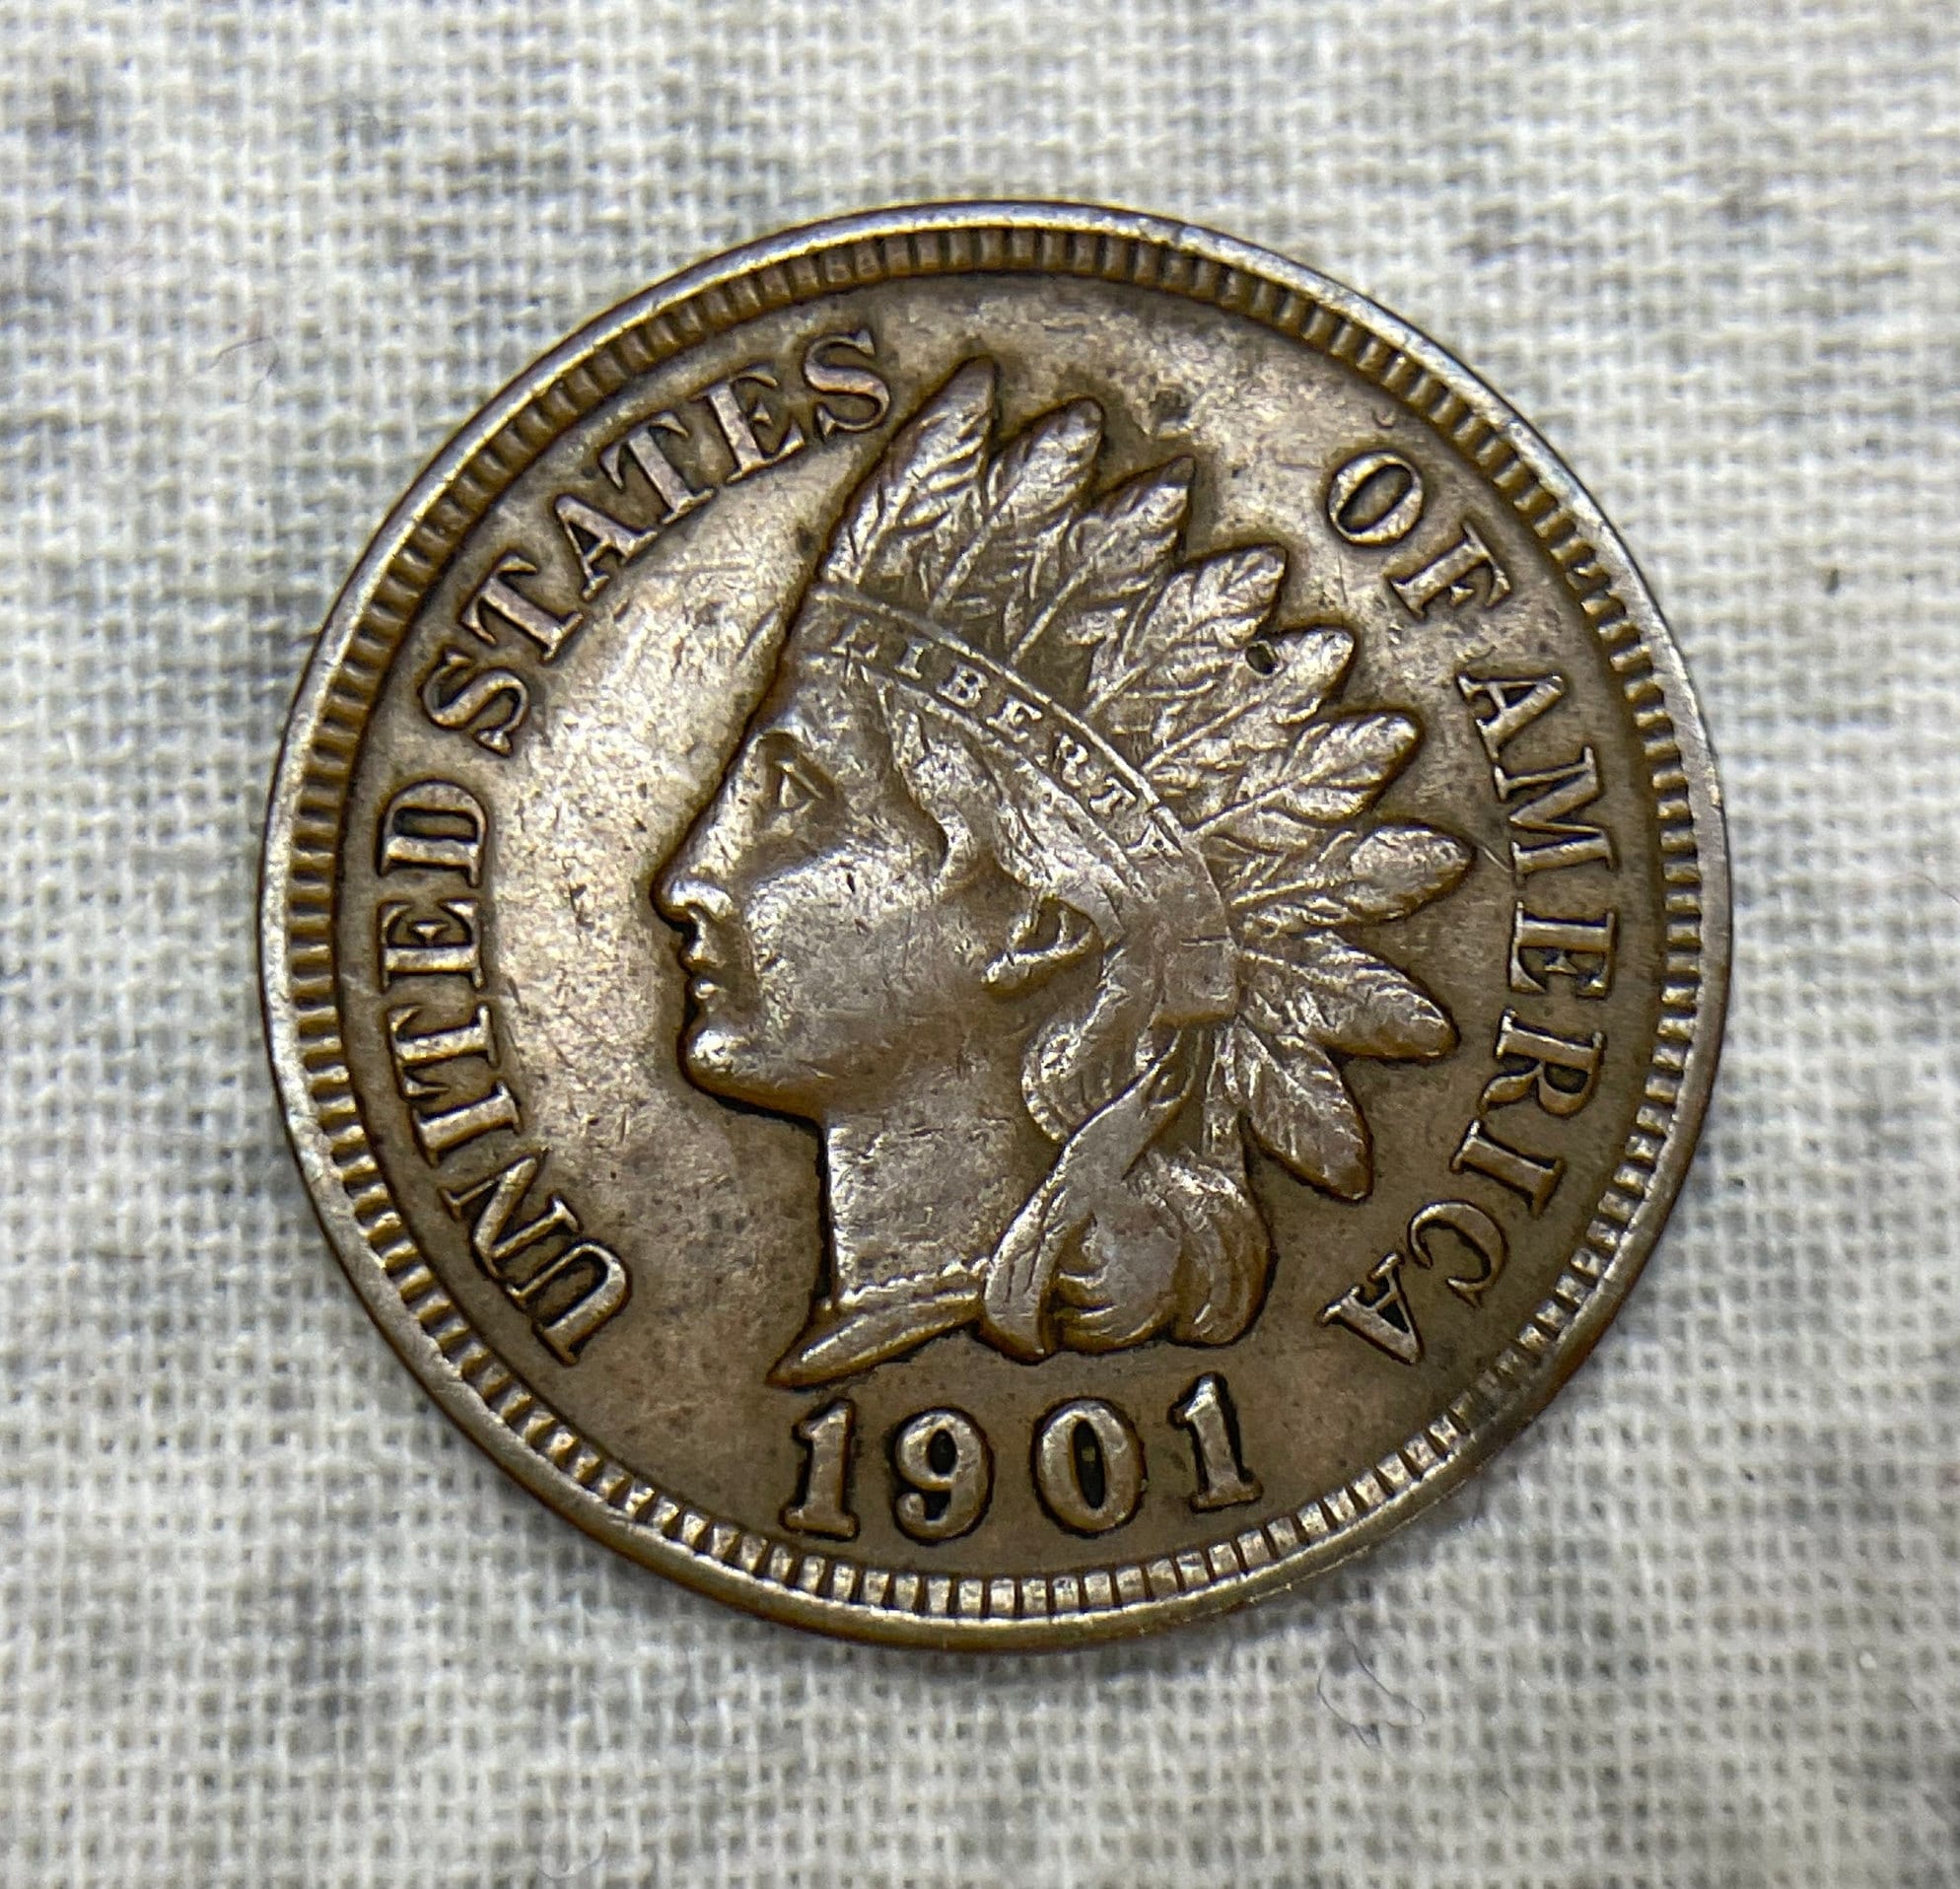 USA - indian head - 1 cent 1901